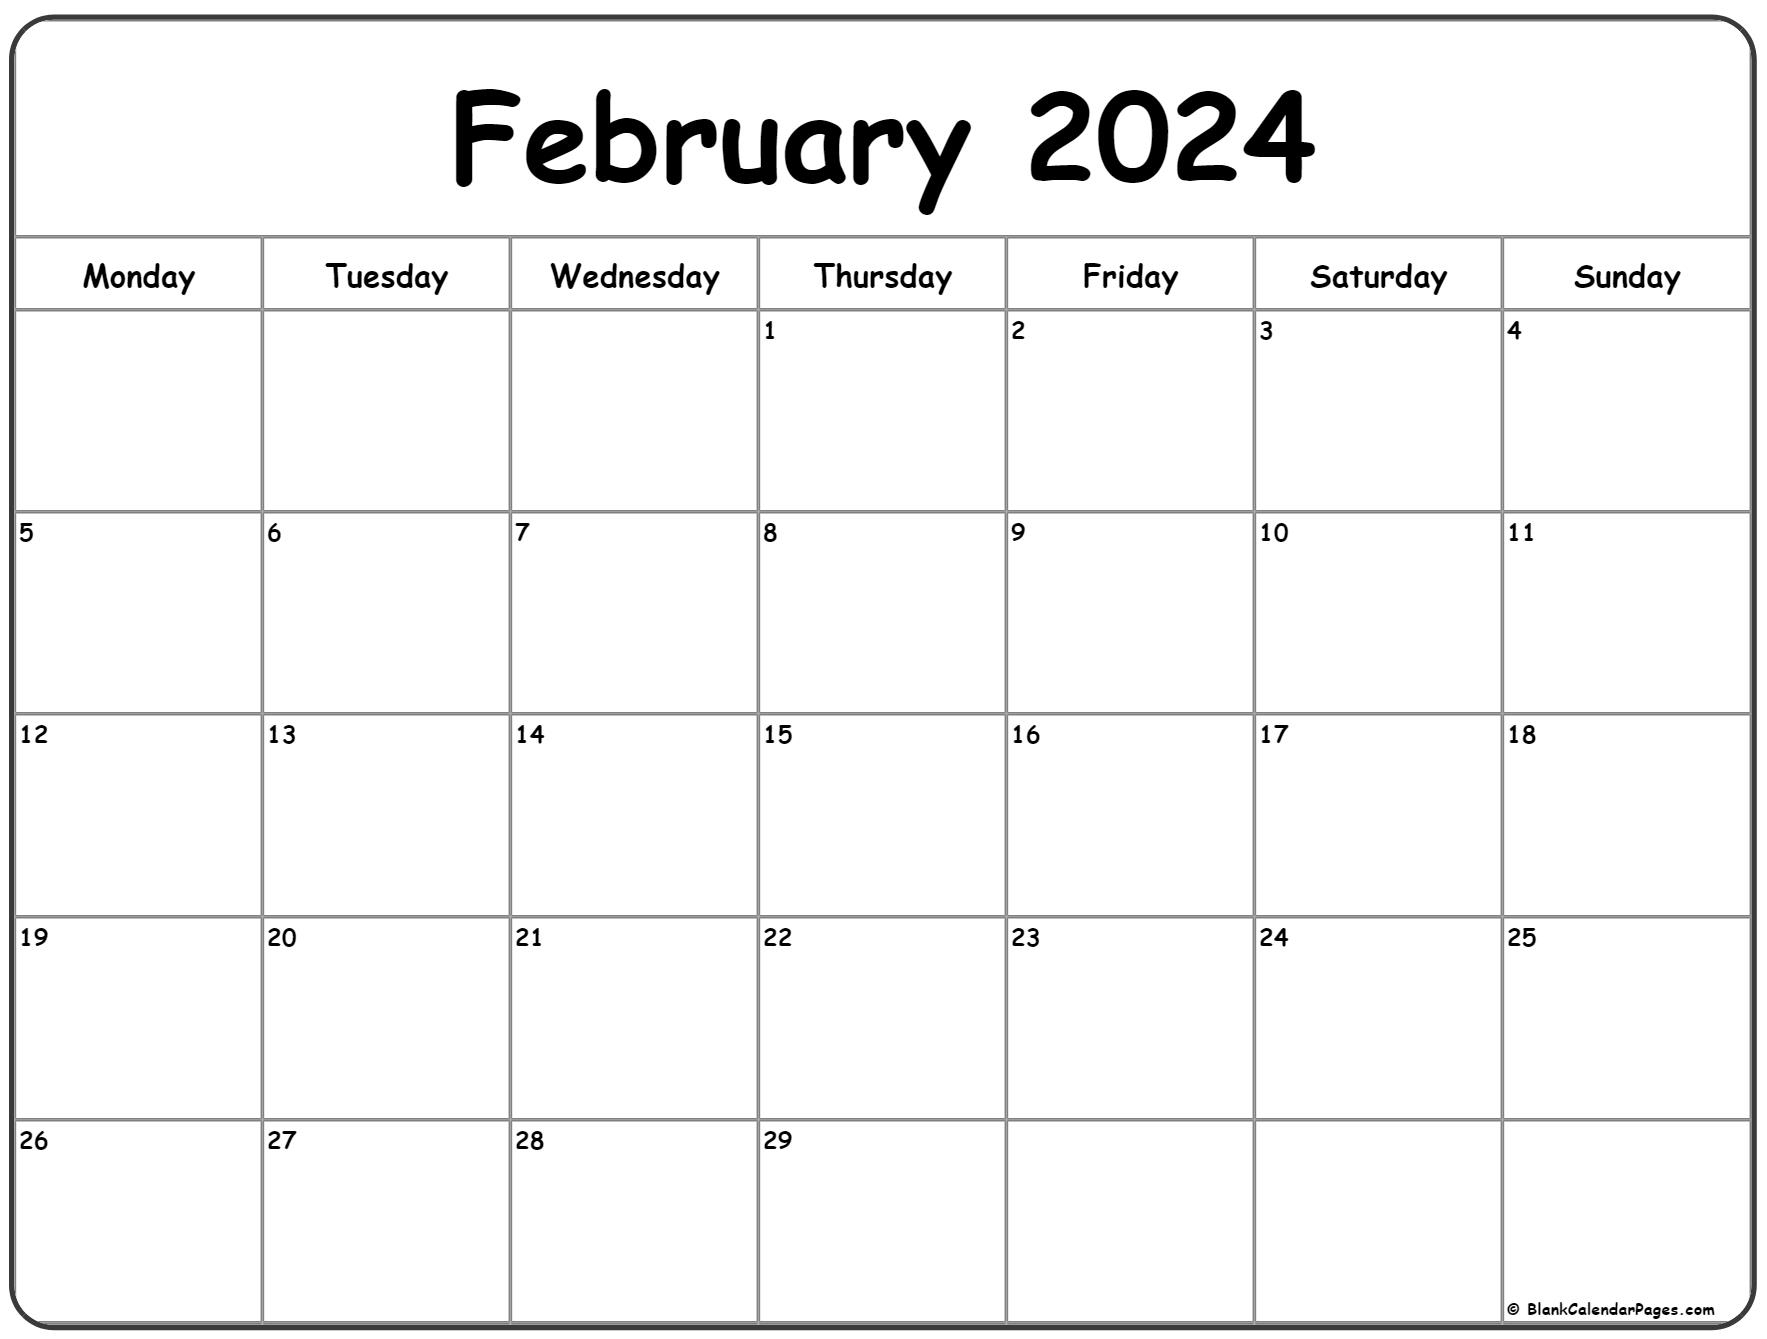 February 2024 Monday Calendar | Monday To Sunday for Printable Calendar Feb 2024